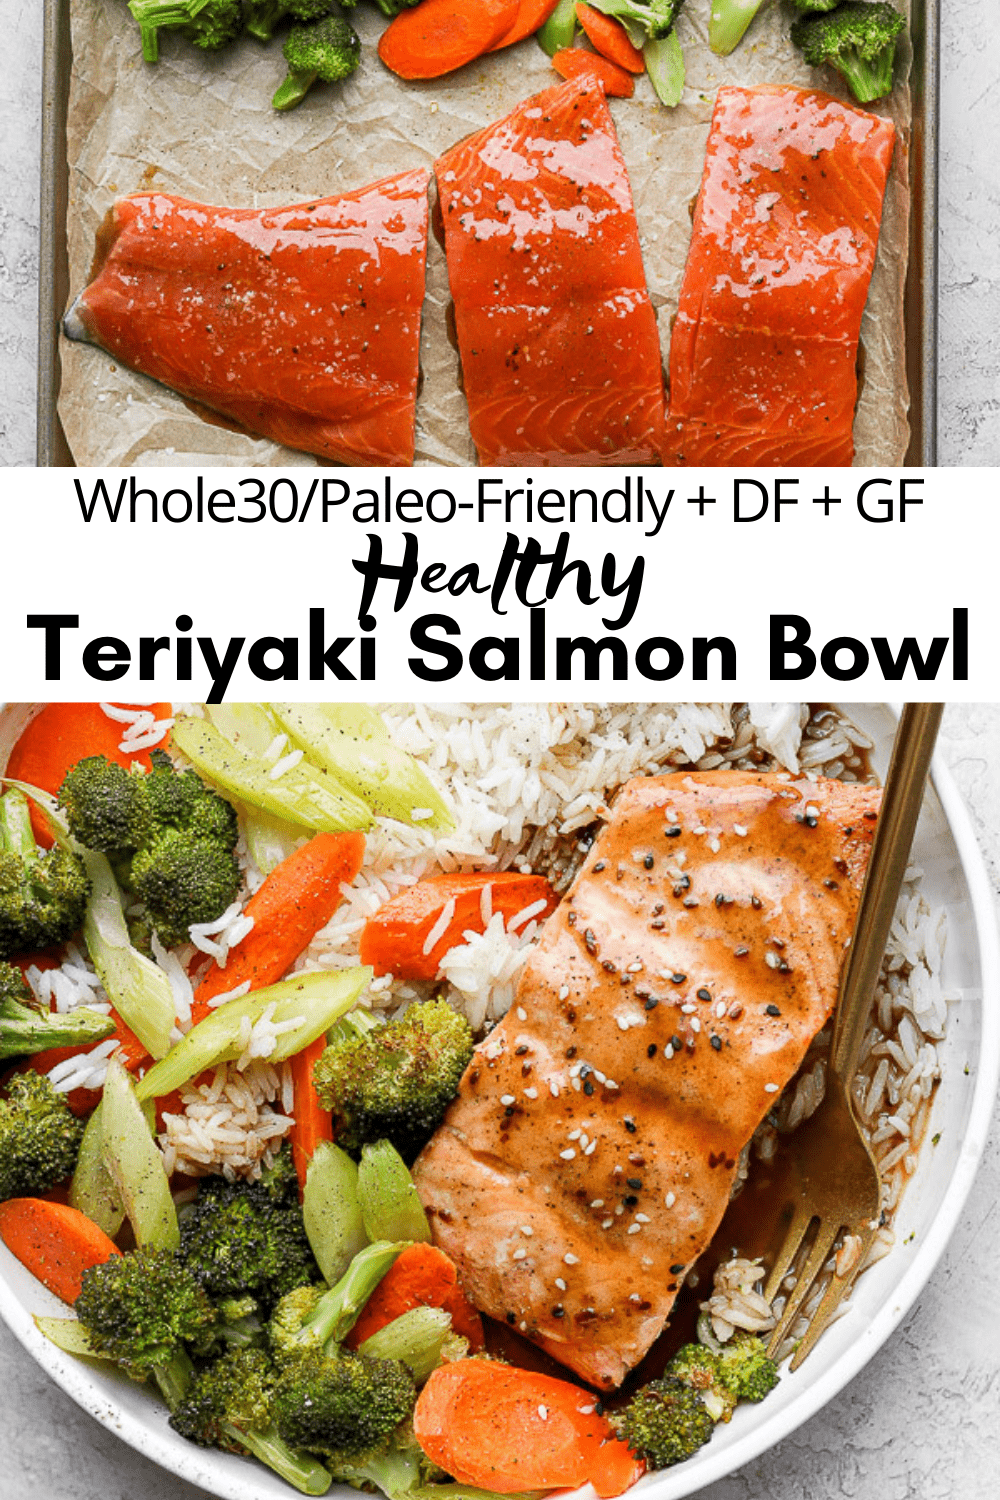 Pinterest image for teriyaki salmon bowls.